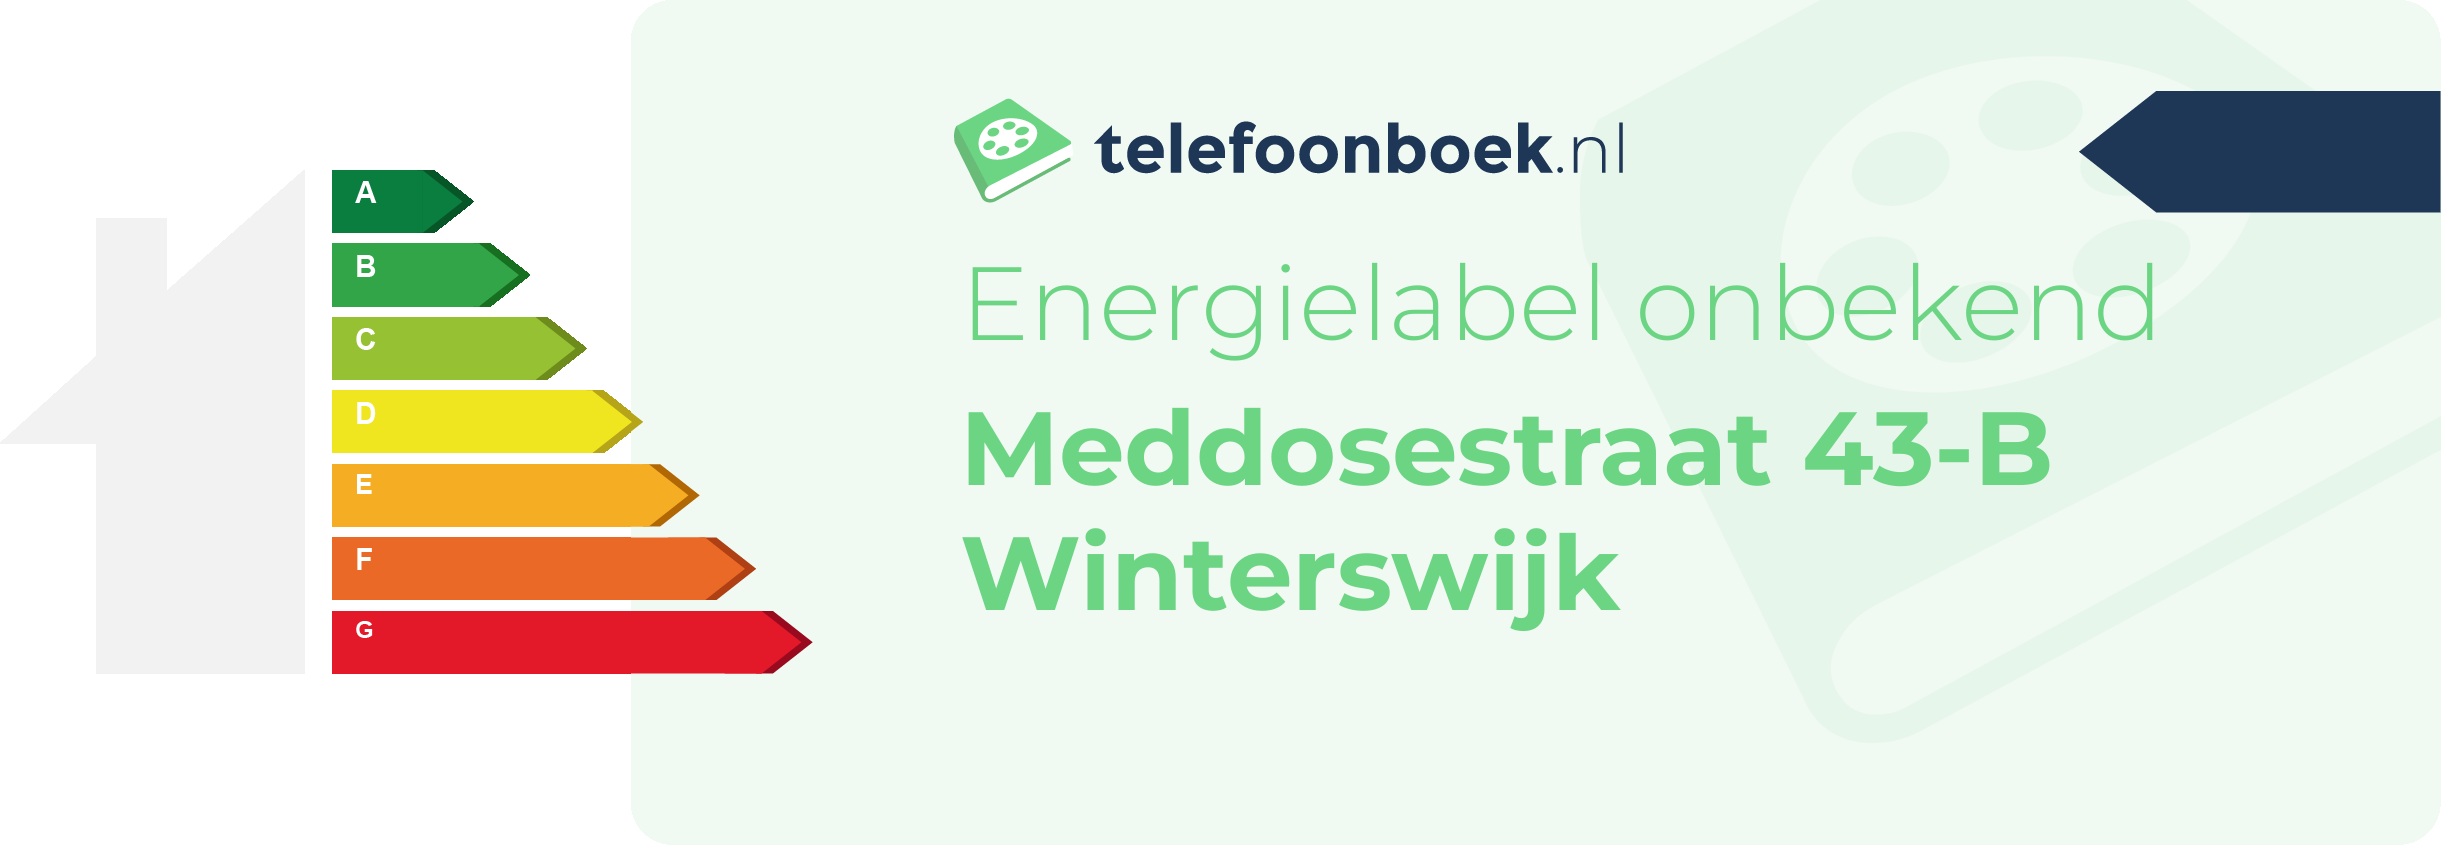 Energielabel Meddosestraat 43-B Winterswijk